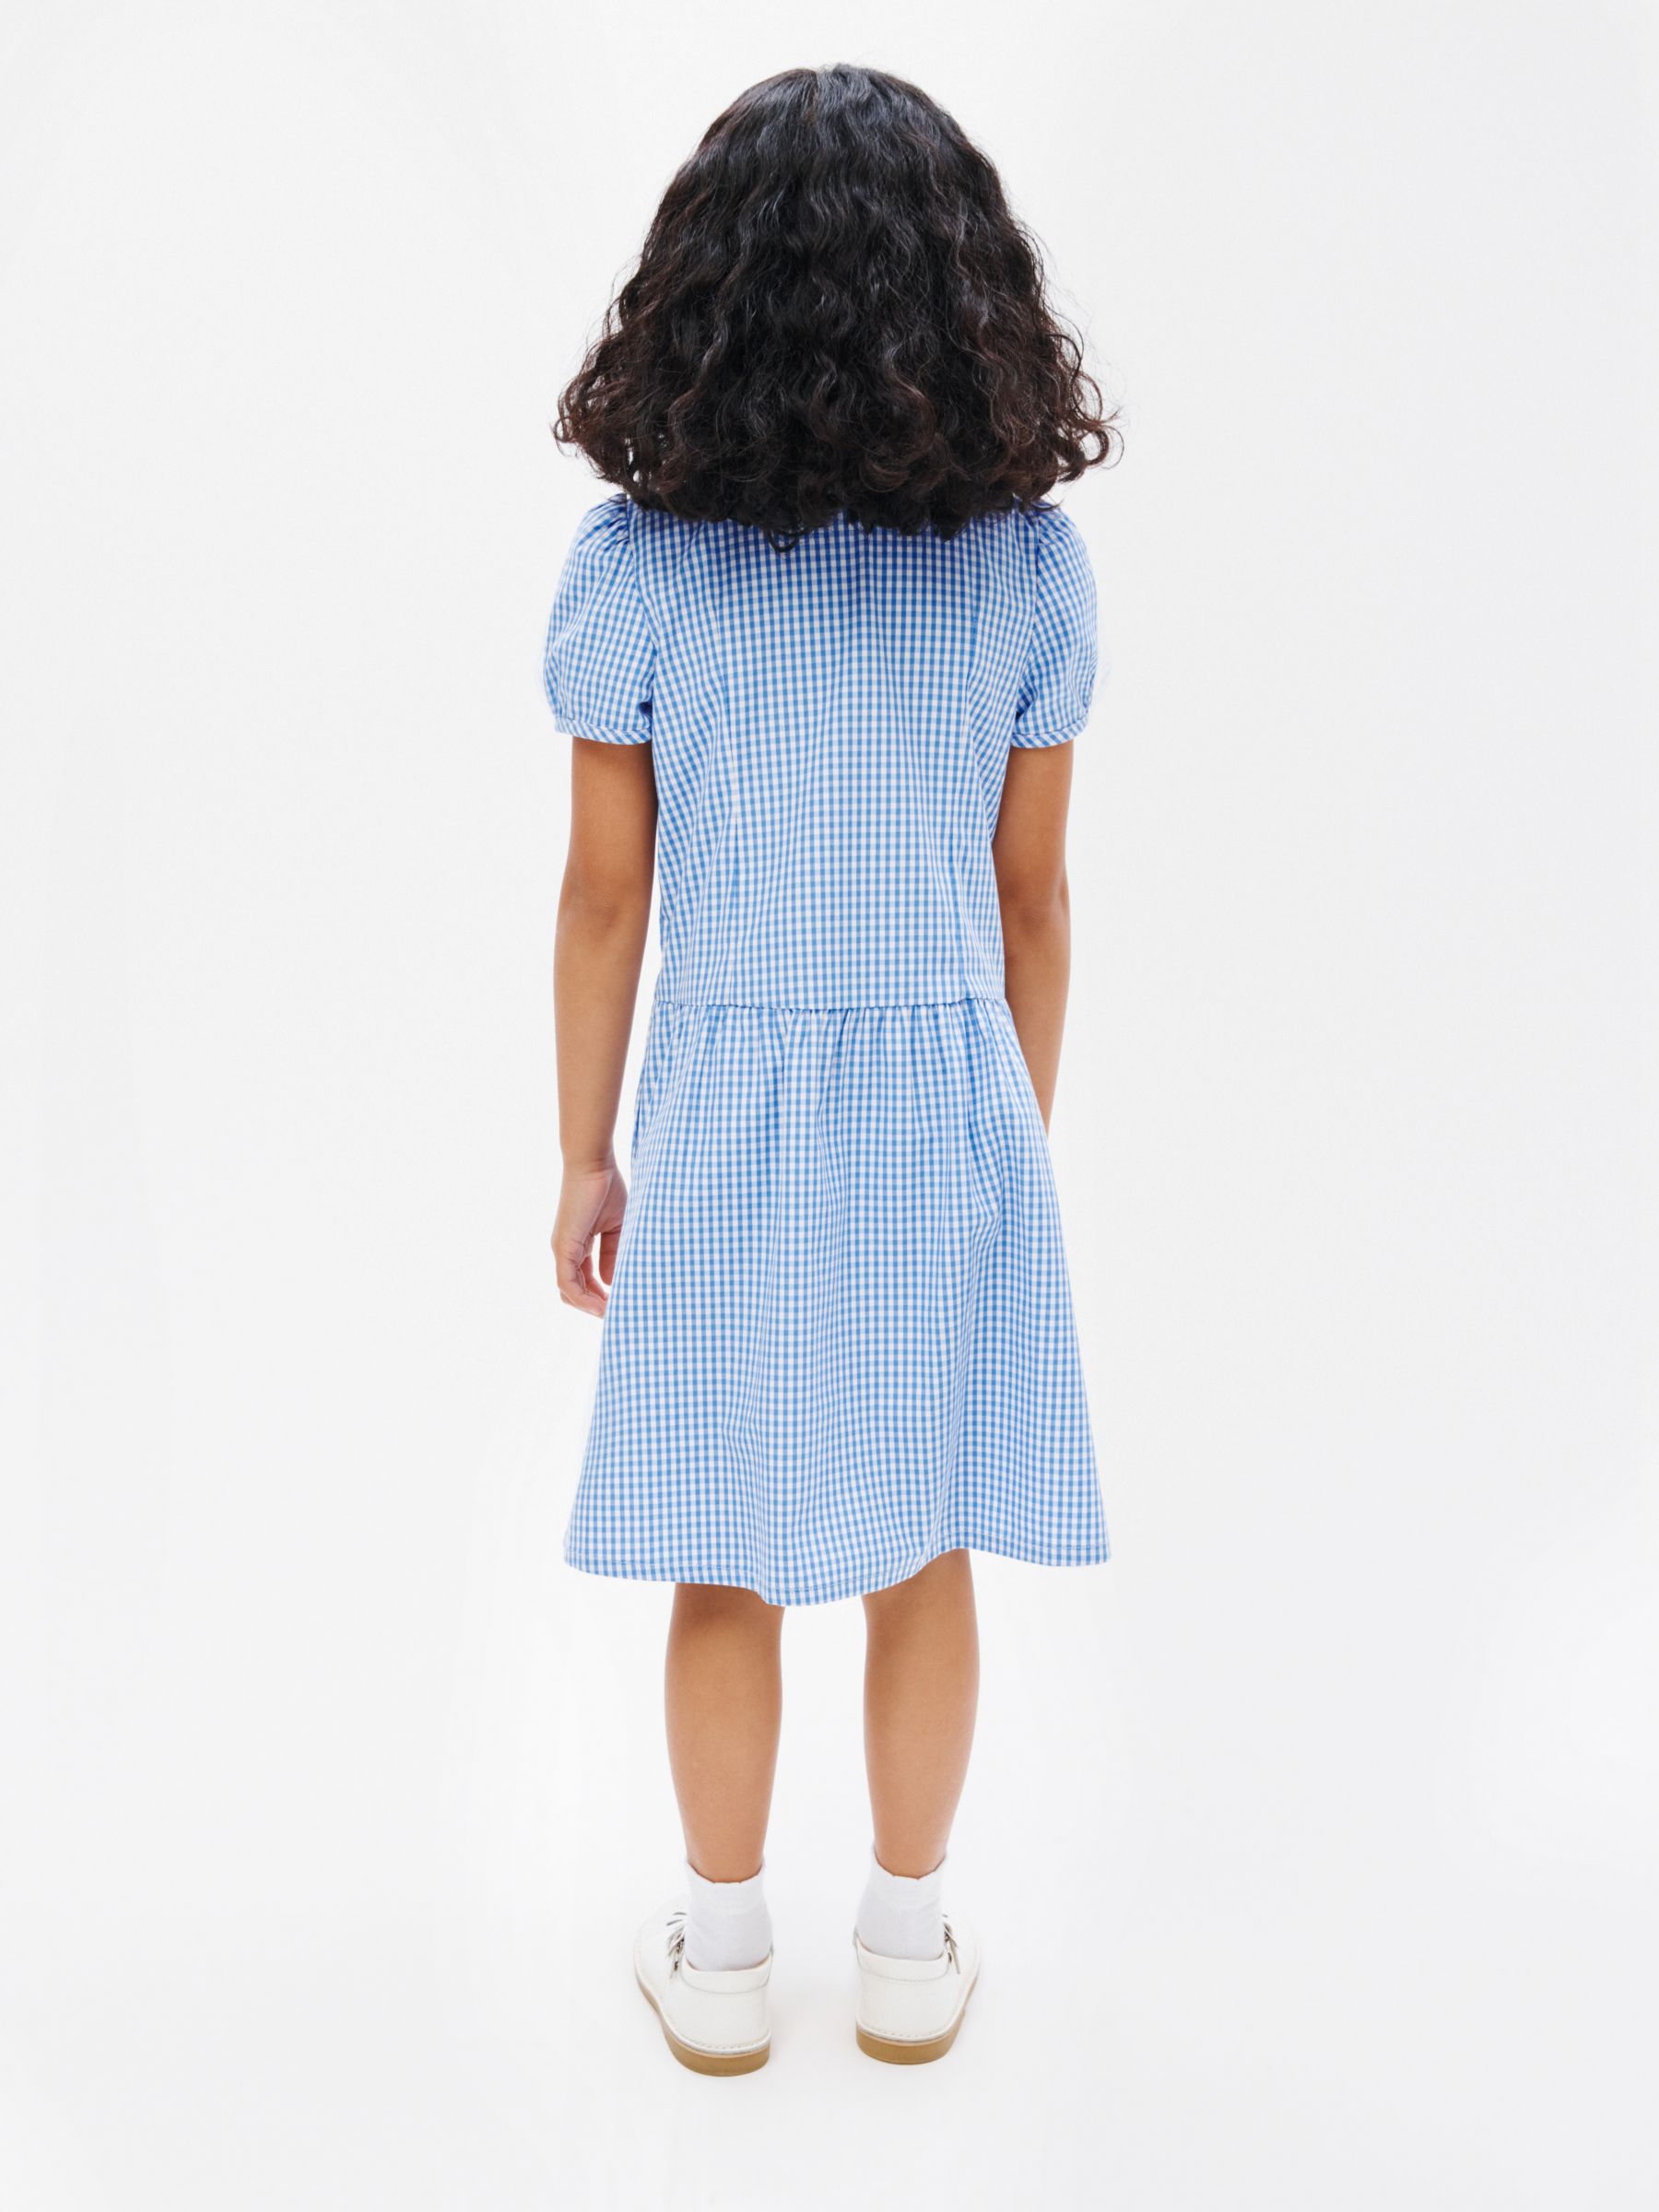 Buy John Lewis School Gingham A-Line Summer Dress Online at johnlewis.com